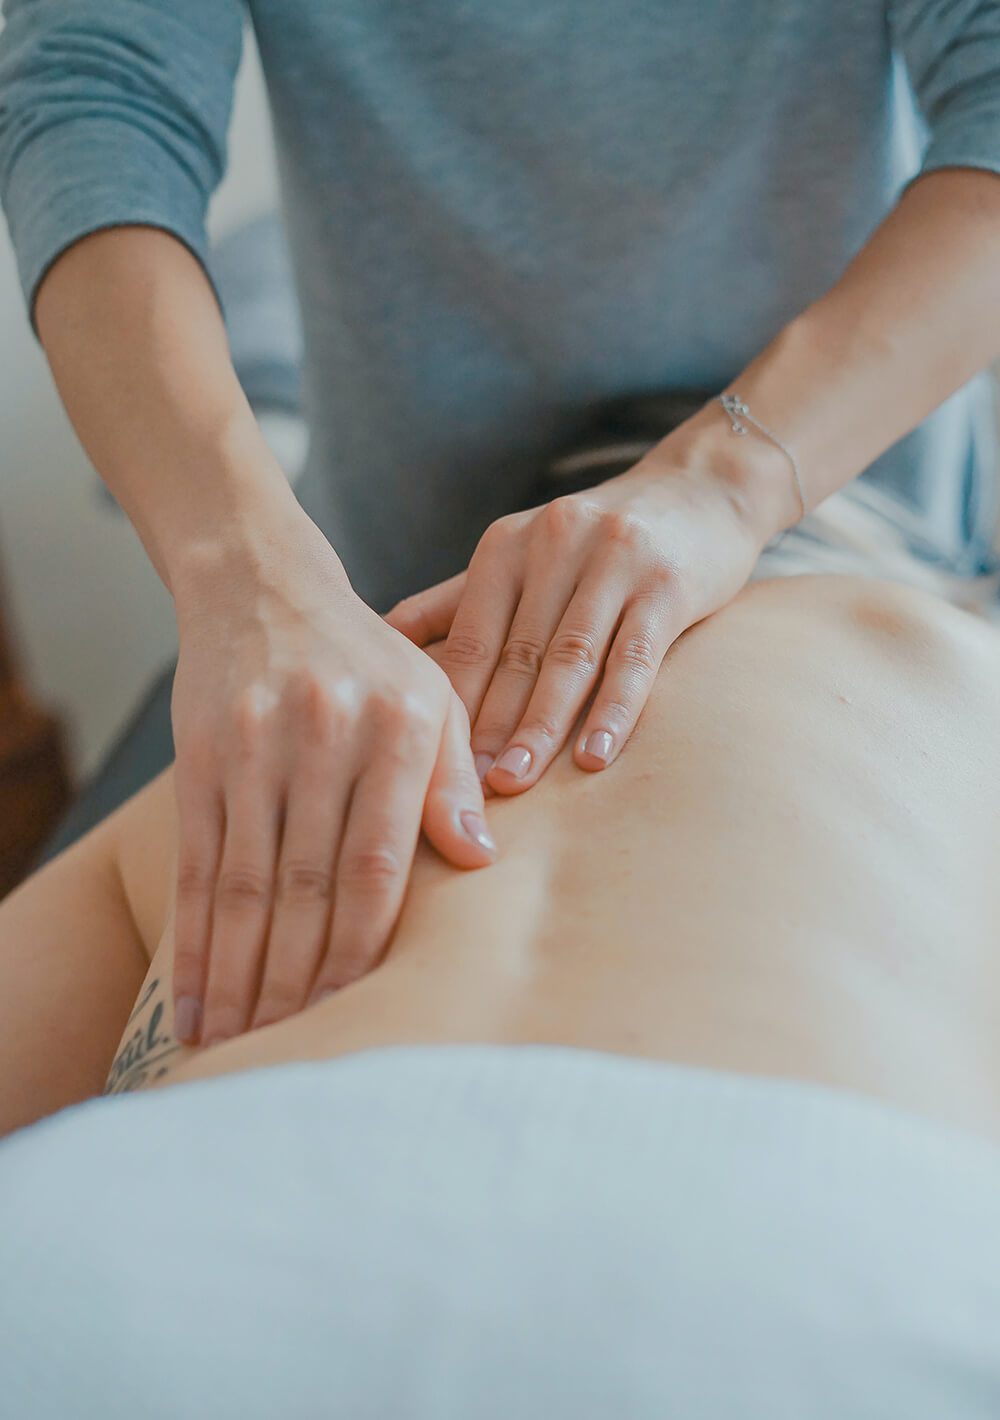 massage thearpist streching and massaging client